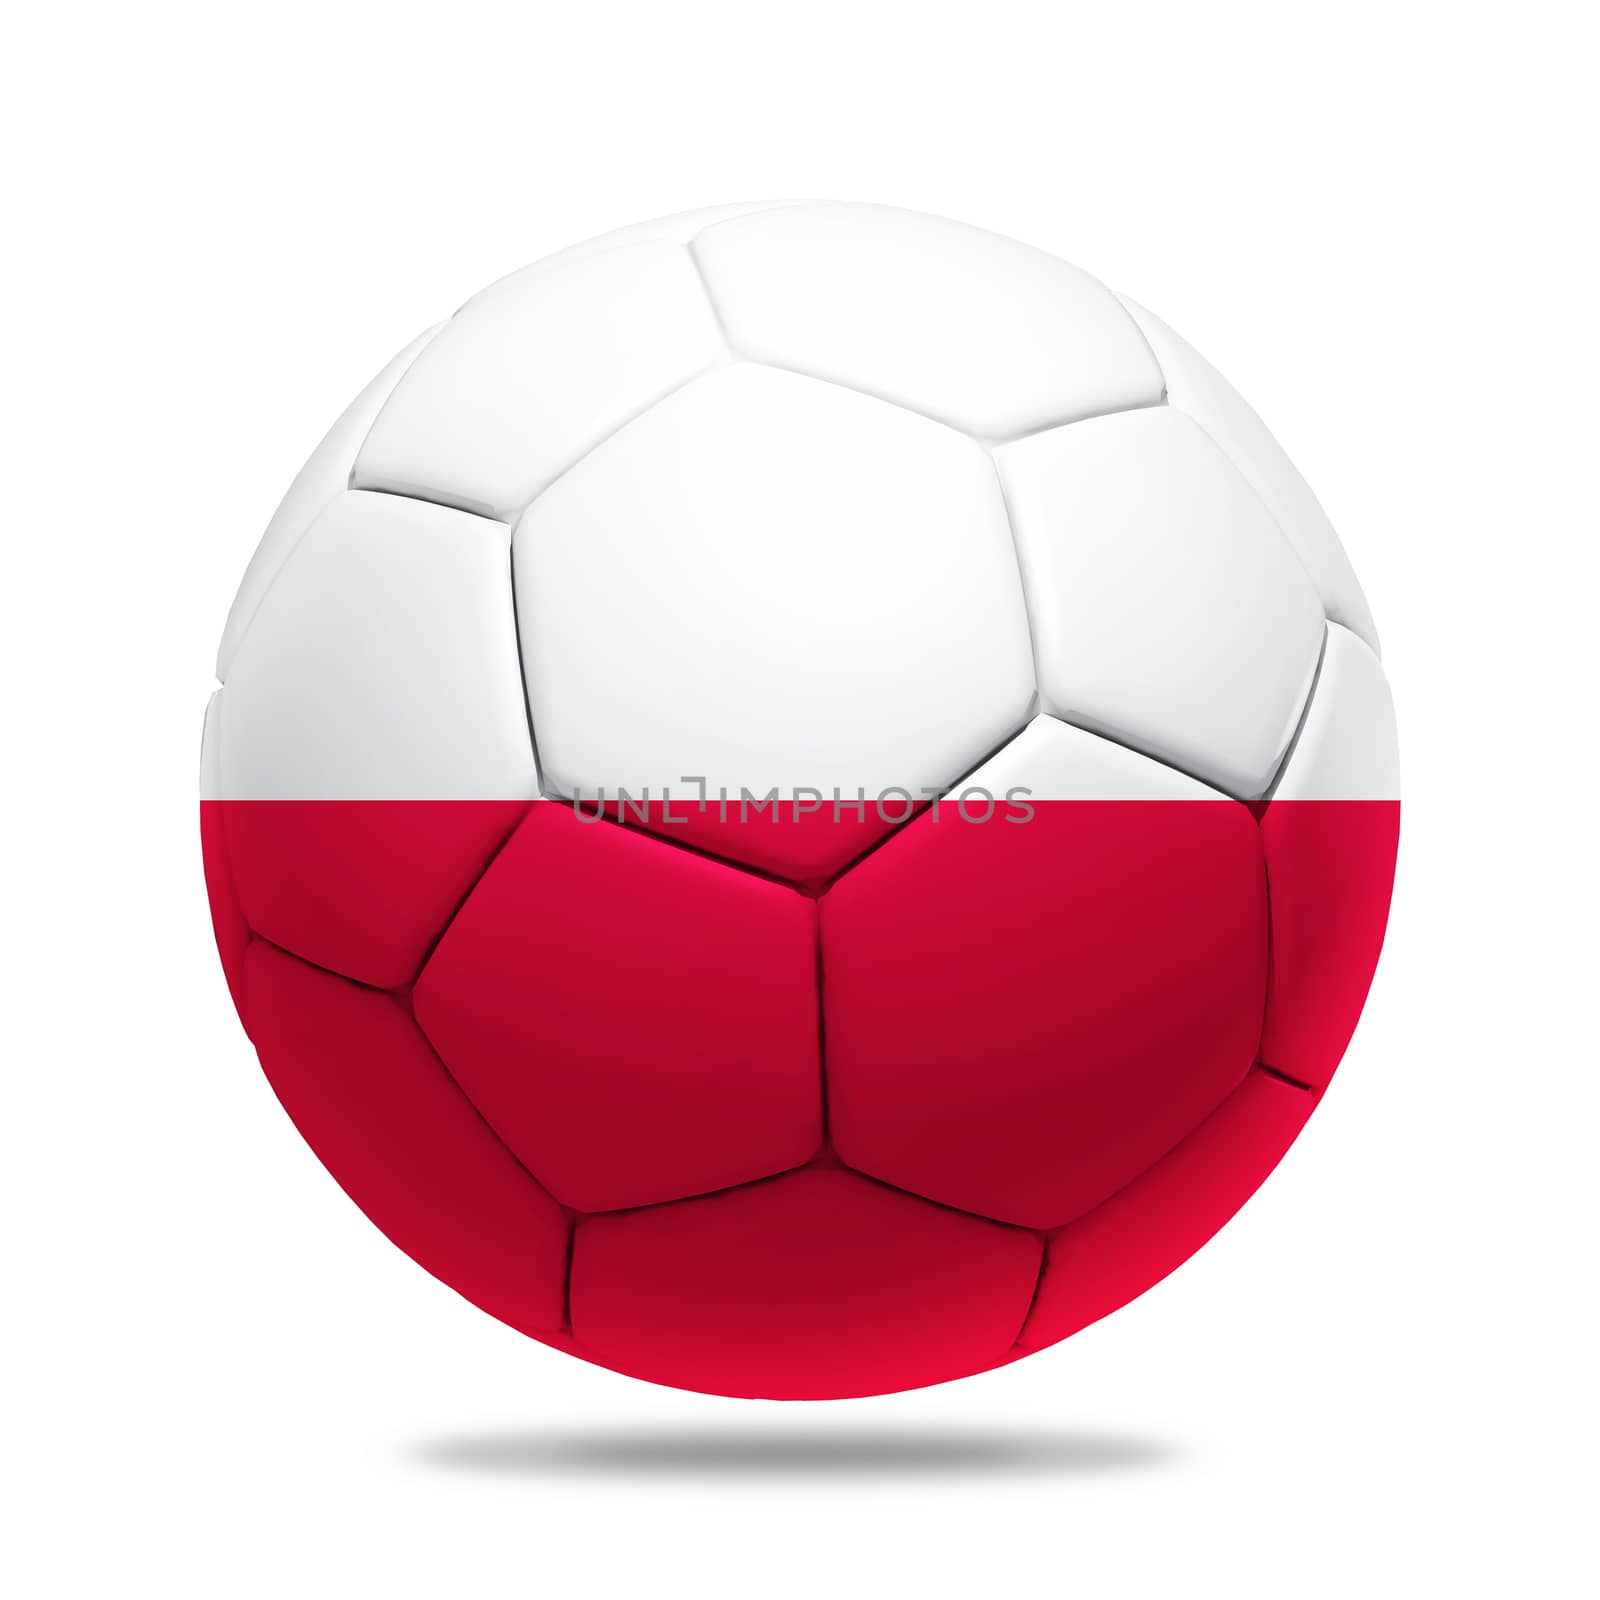 3D soccer ball with Poland team flag, isolated on white